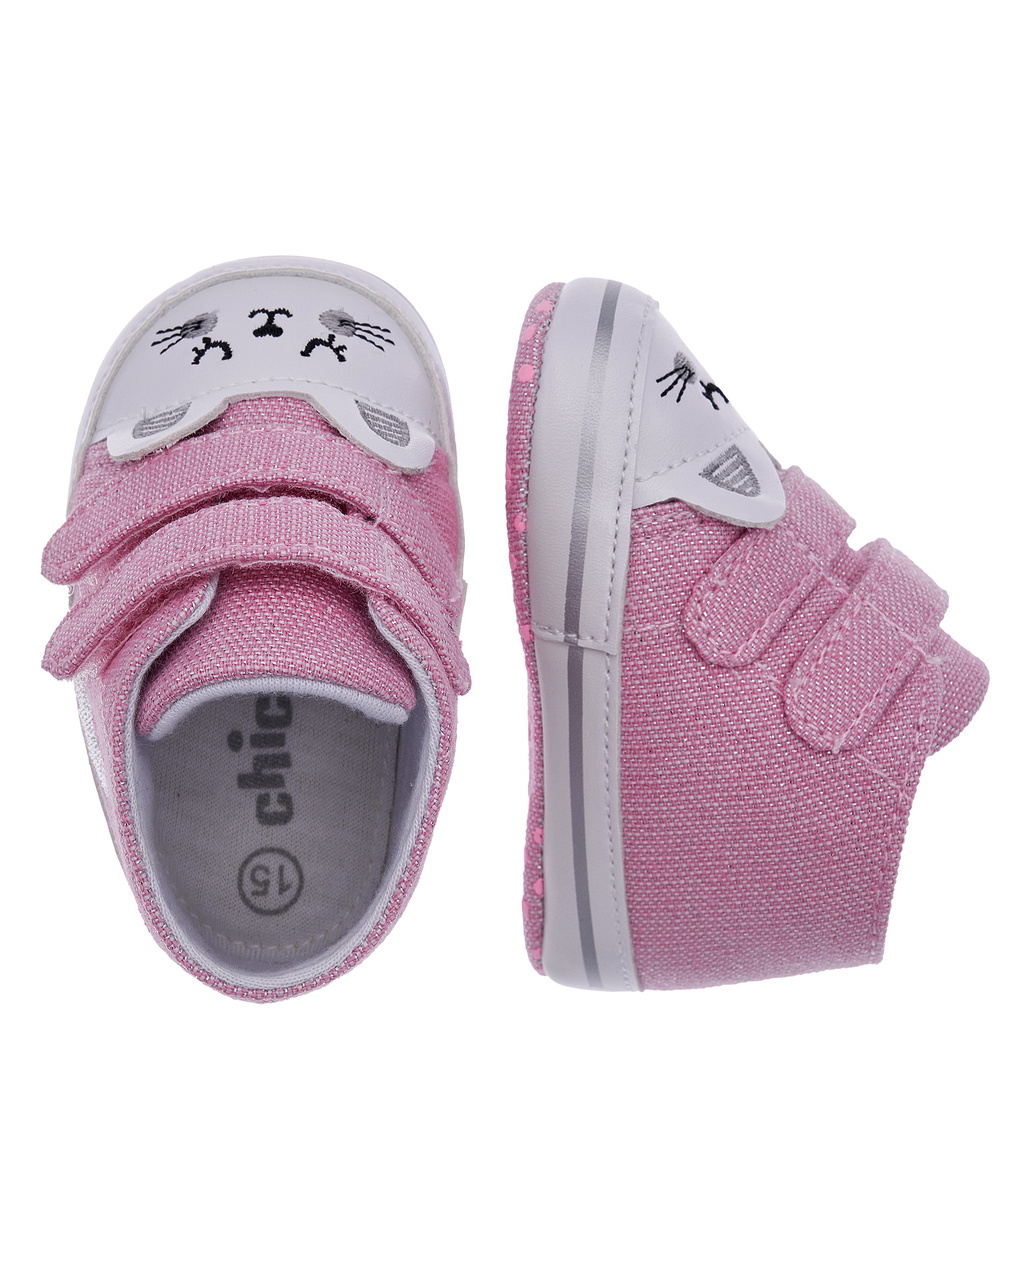 Sneaker nolly por neonato - Chicco